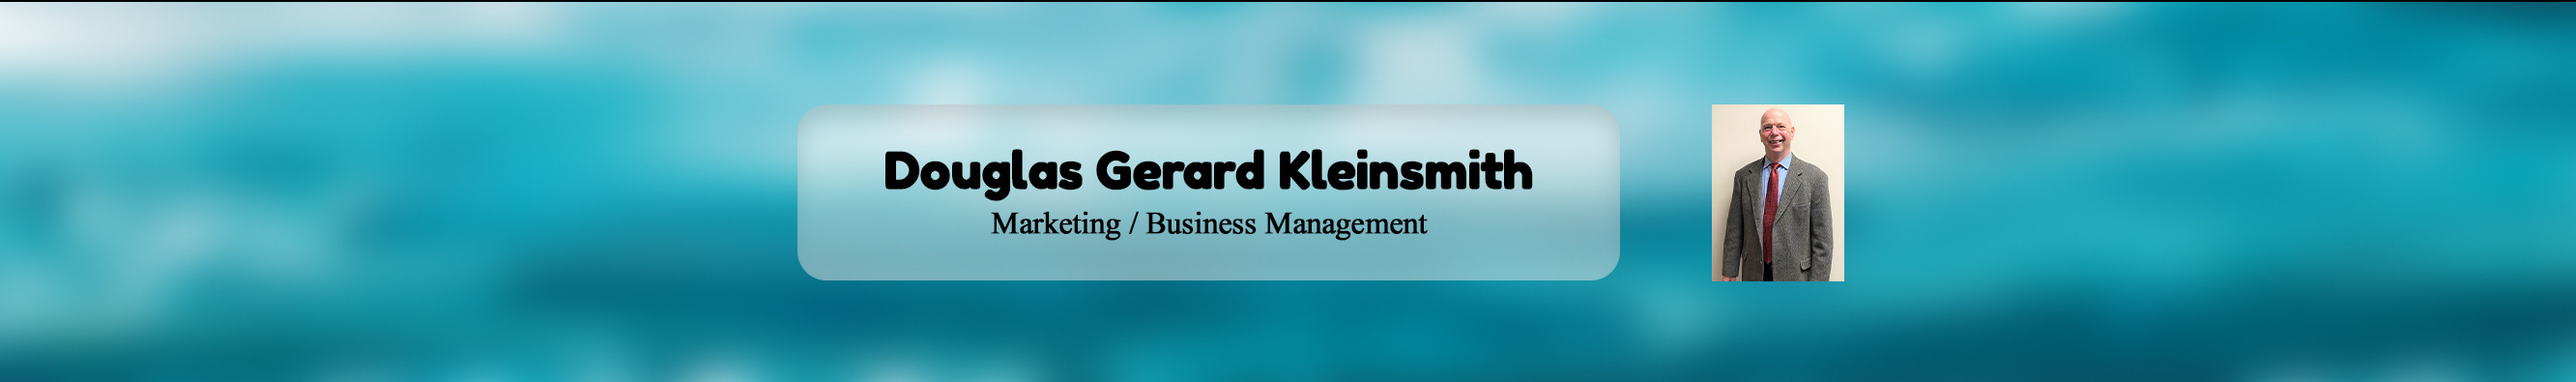 Douglas Gerard Kleinsmith's profile banner